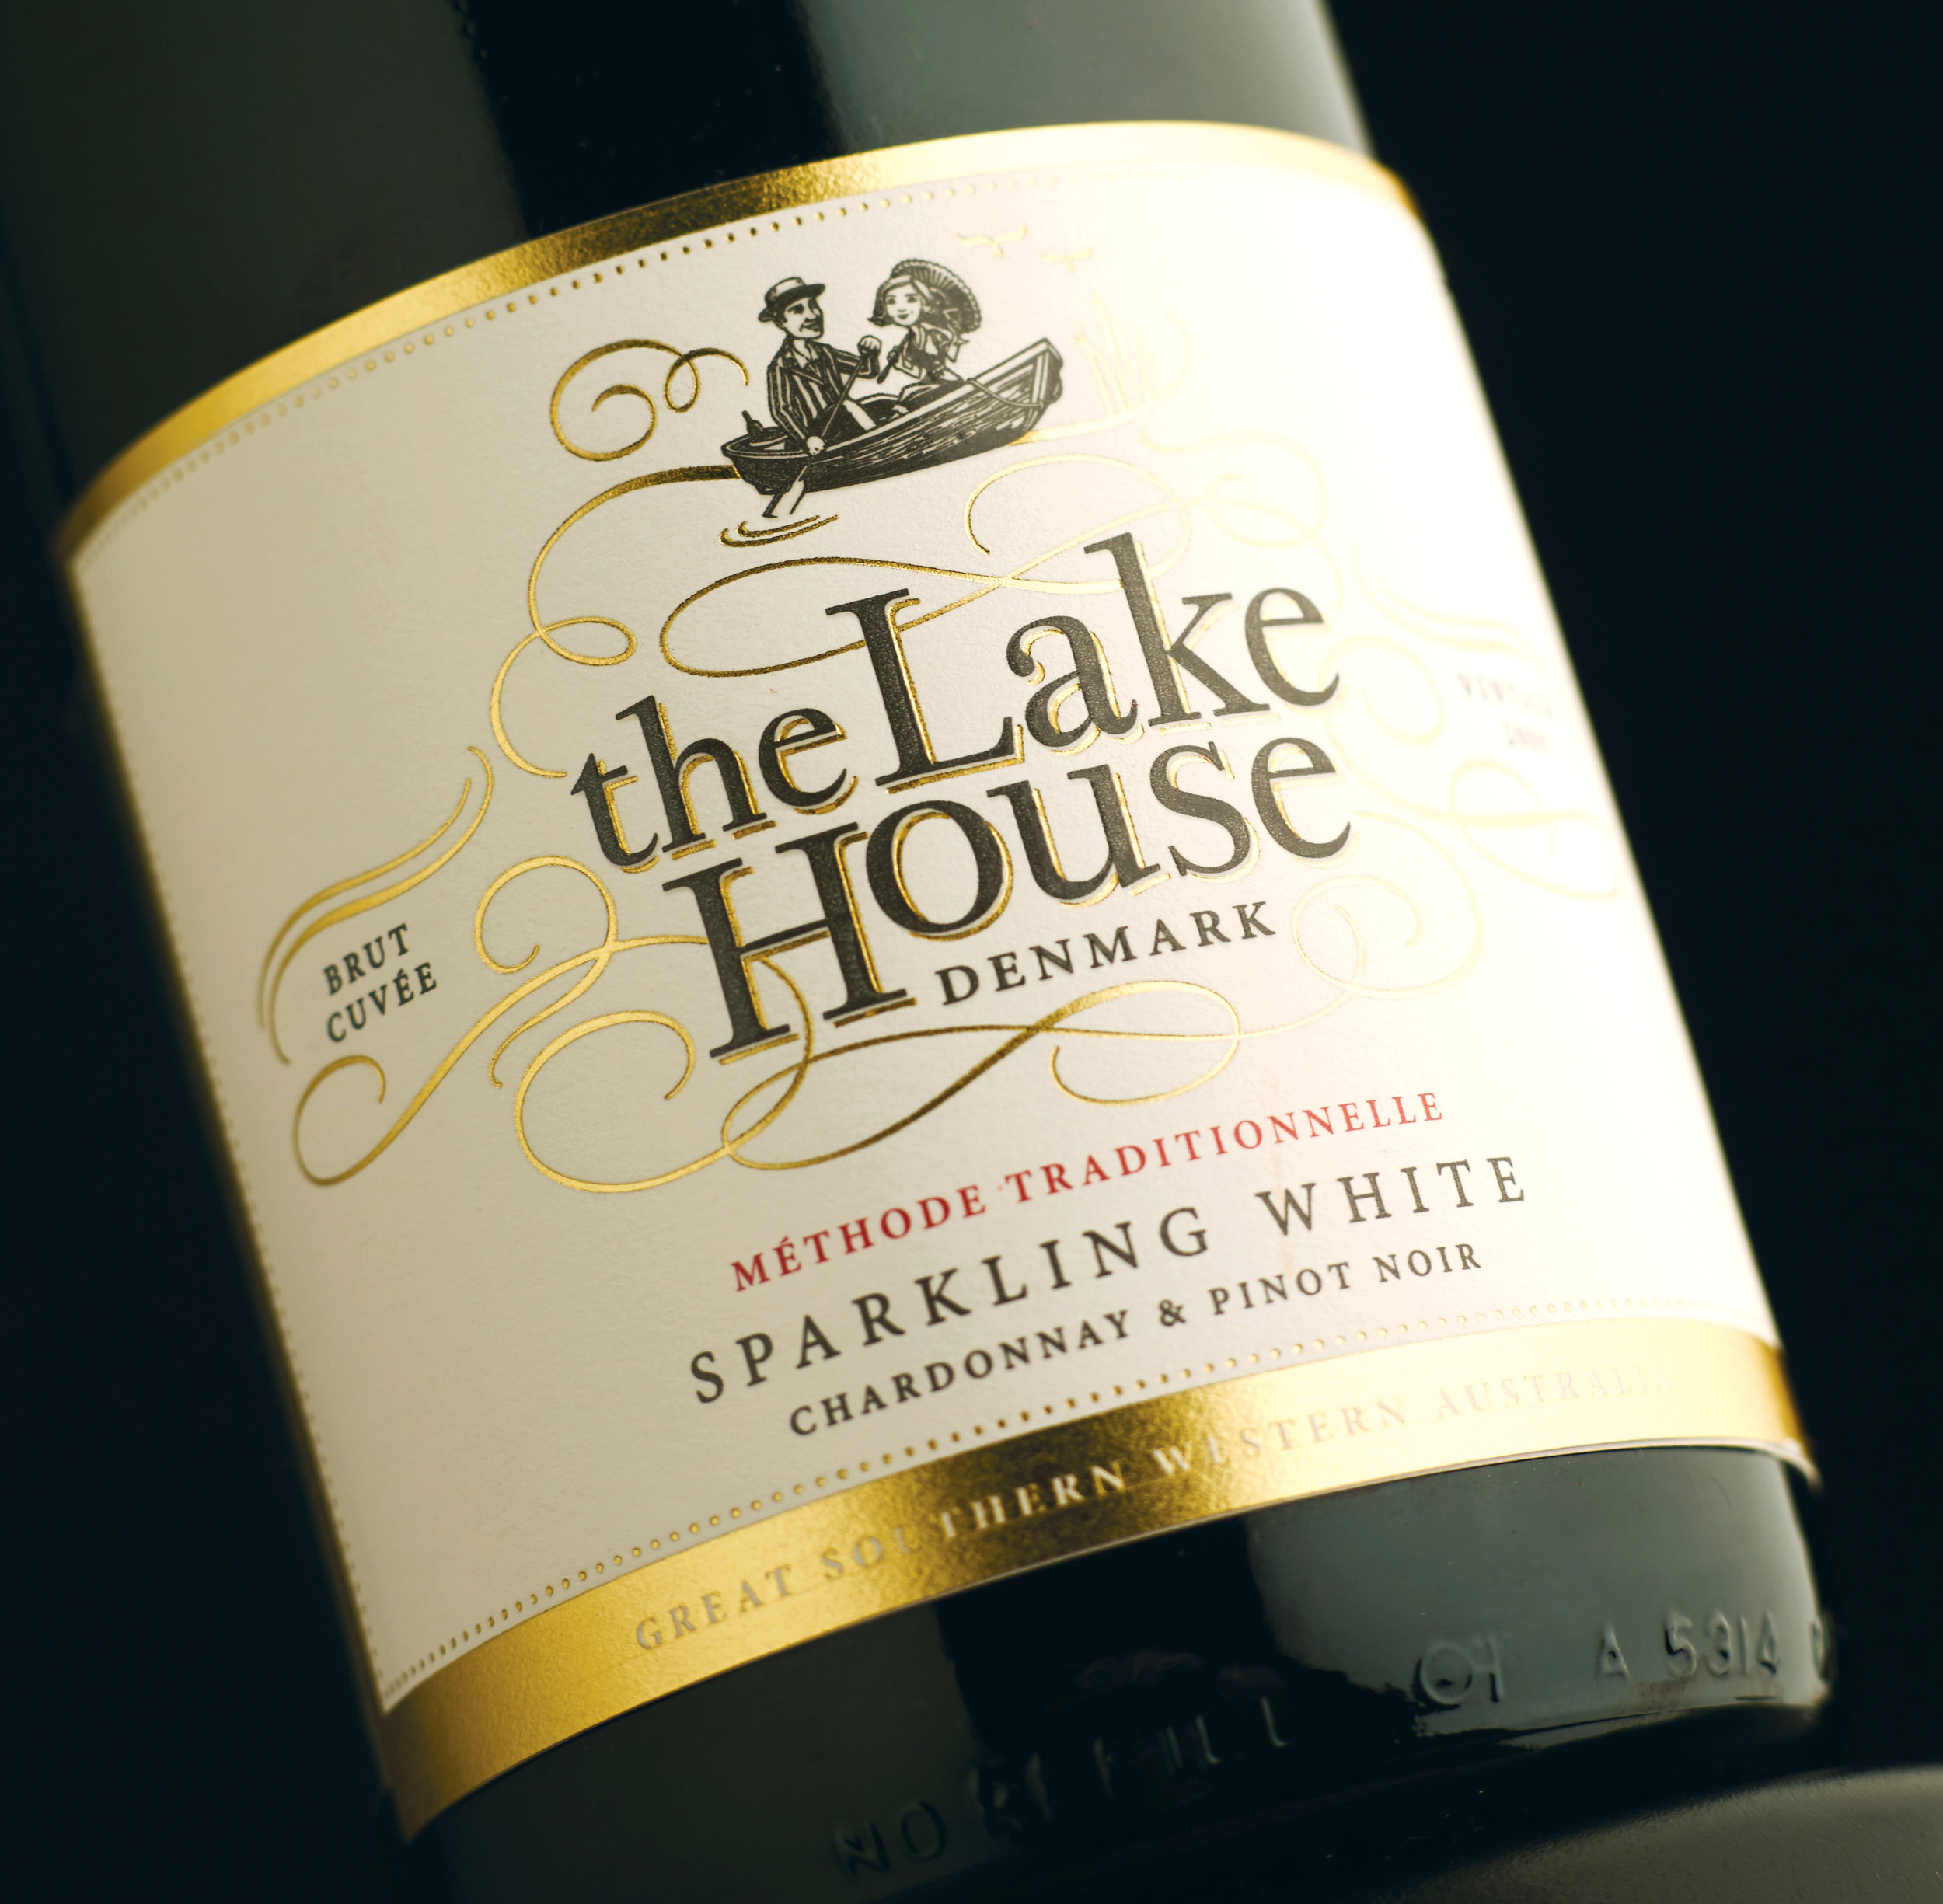 The Lake House Denmark wine label design